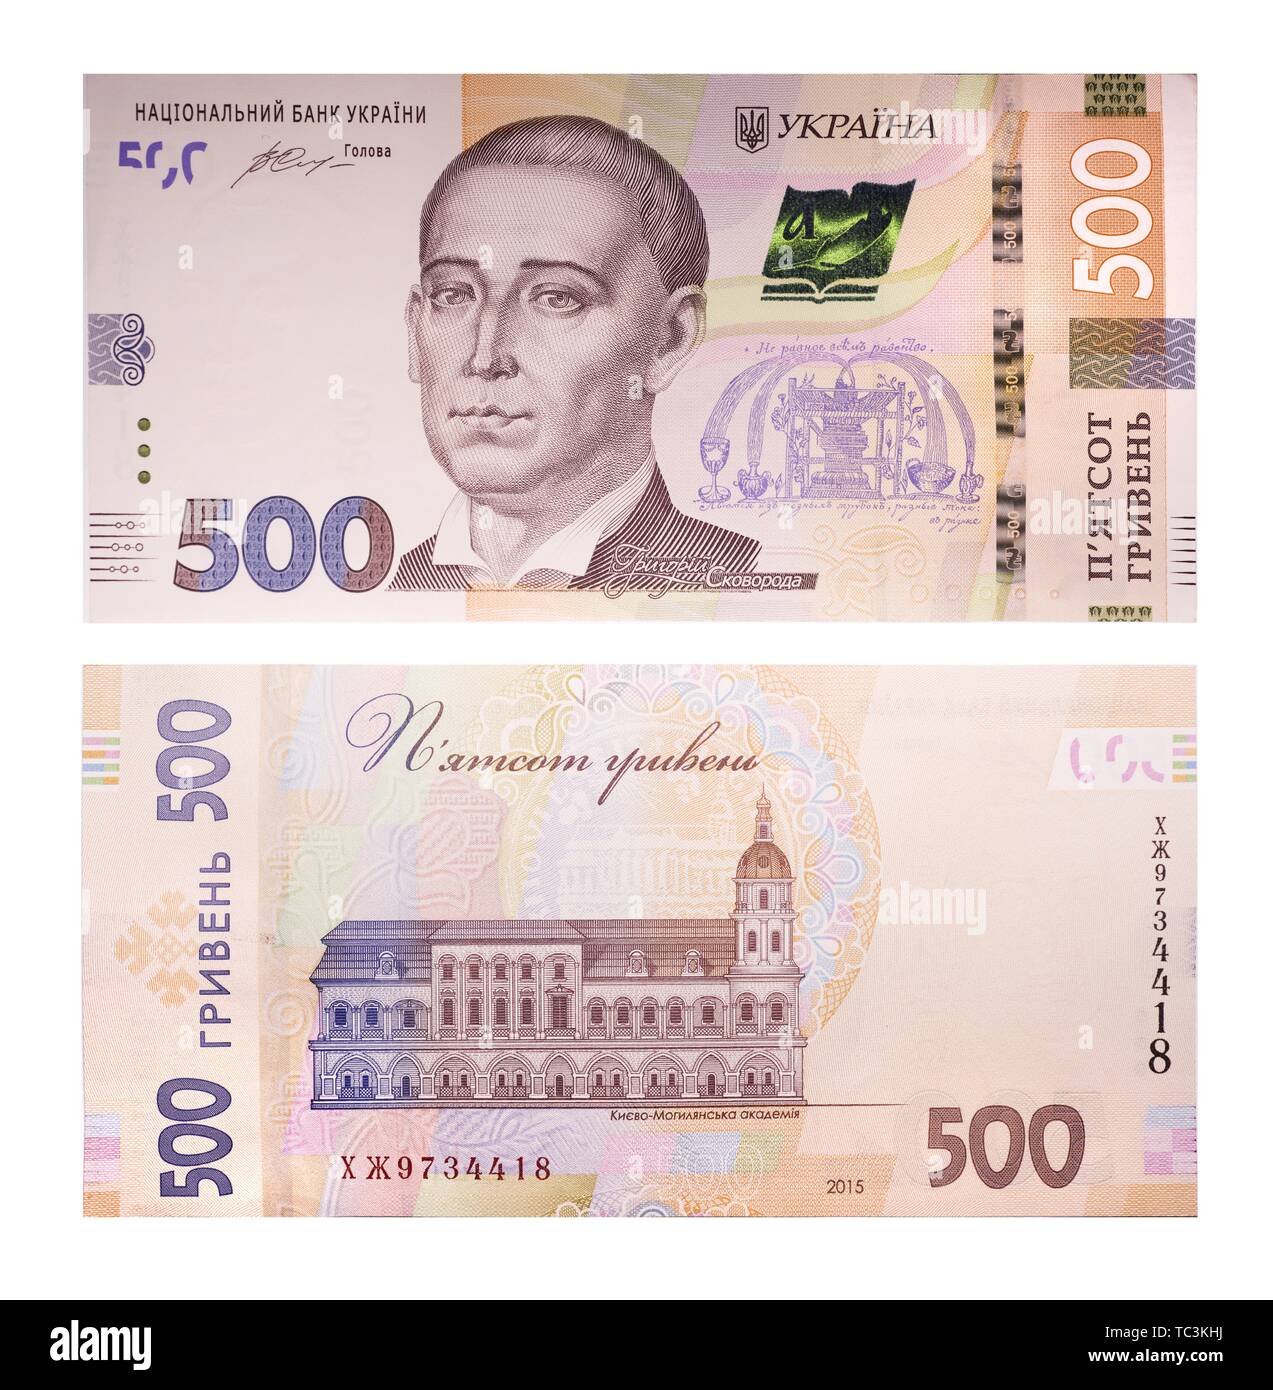 New note 500 Ukrainian hryvnia, front side and backside, sample 2015, Ukraine Stock Photo